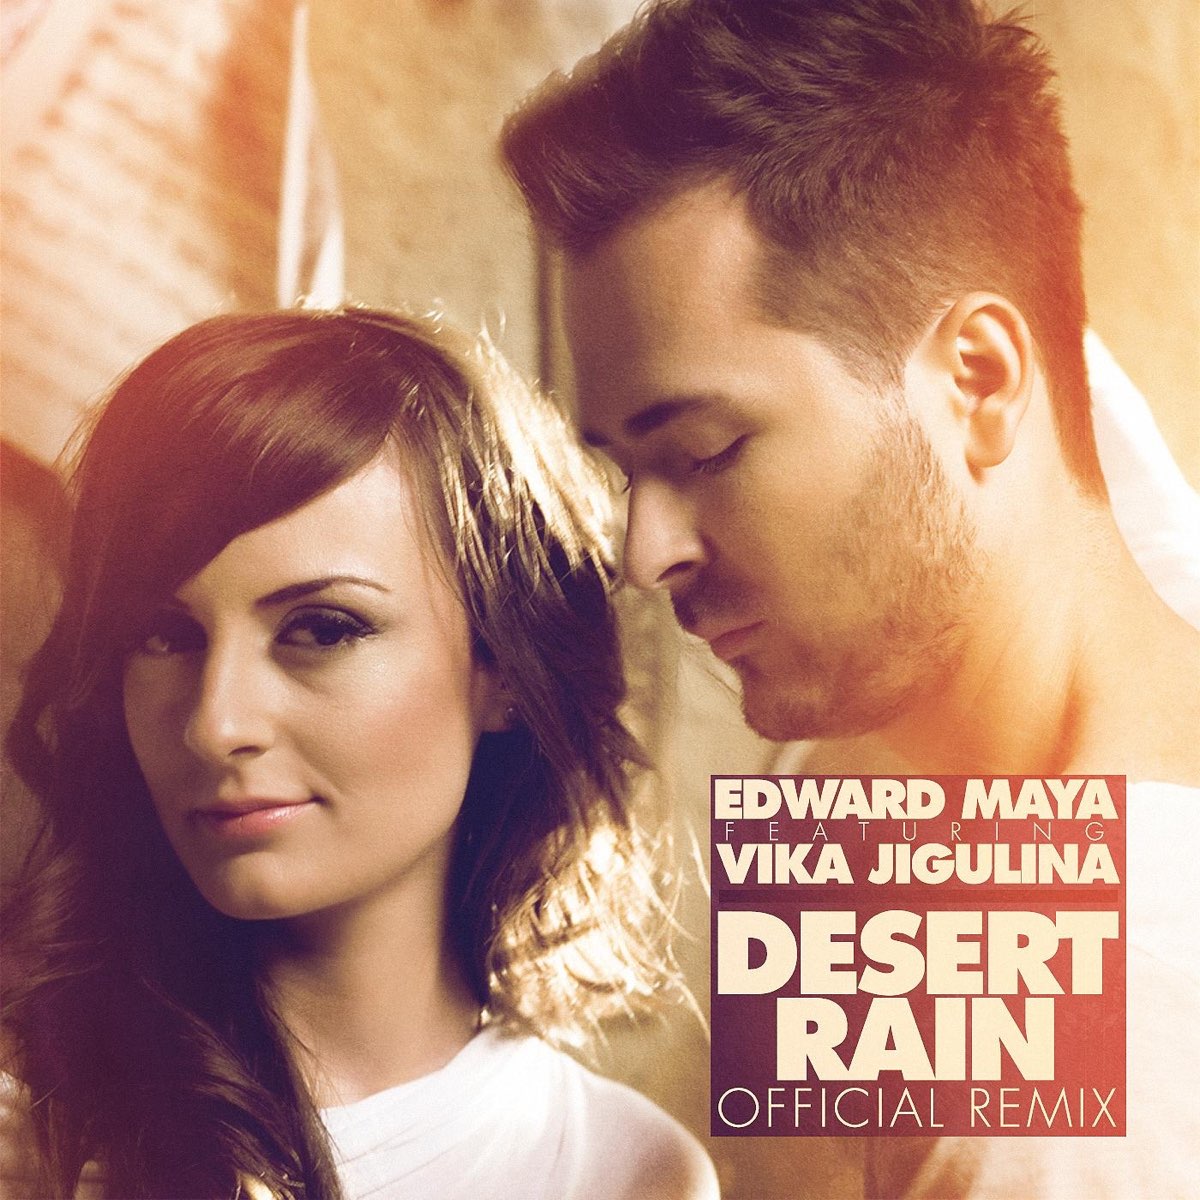 Desert Rain Вика Жигулина. Edward Maya Desert Rain album. Edward maya feat